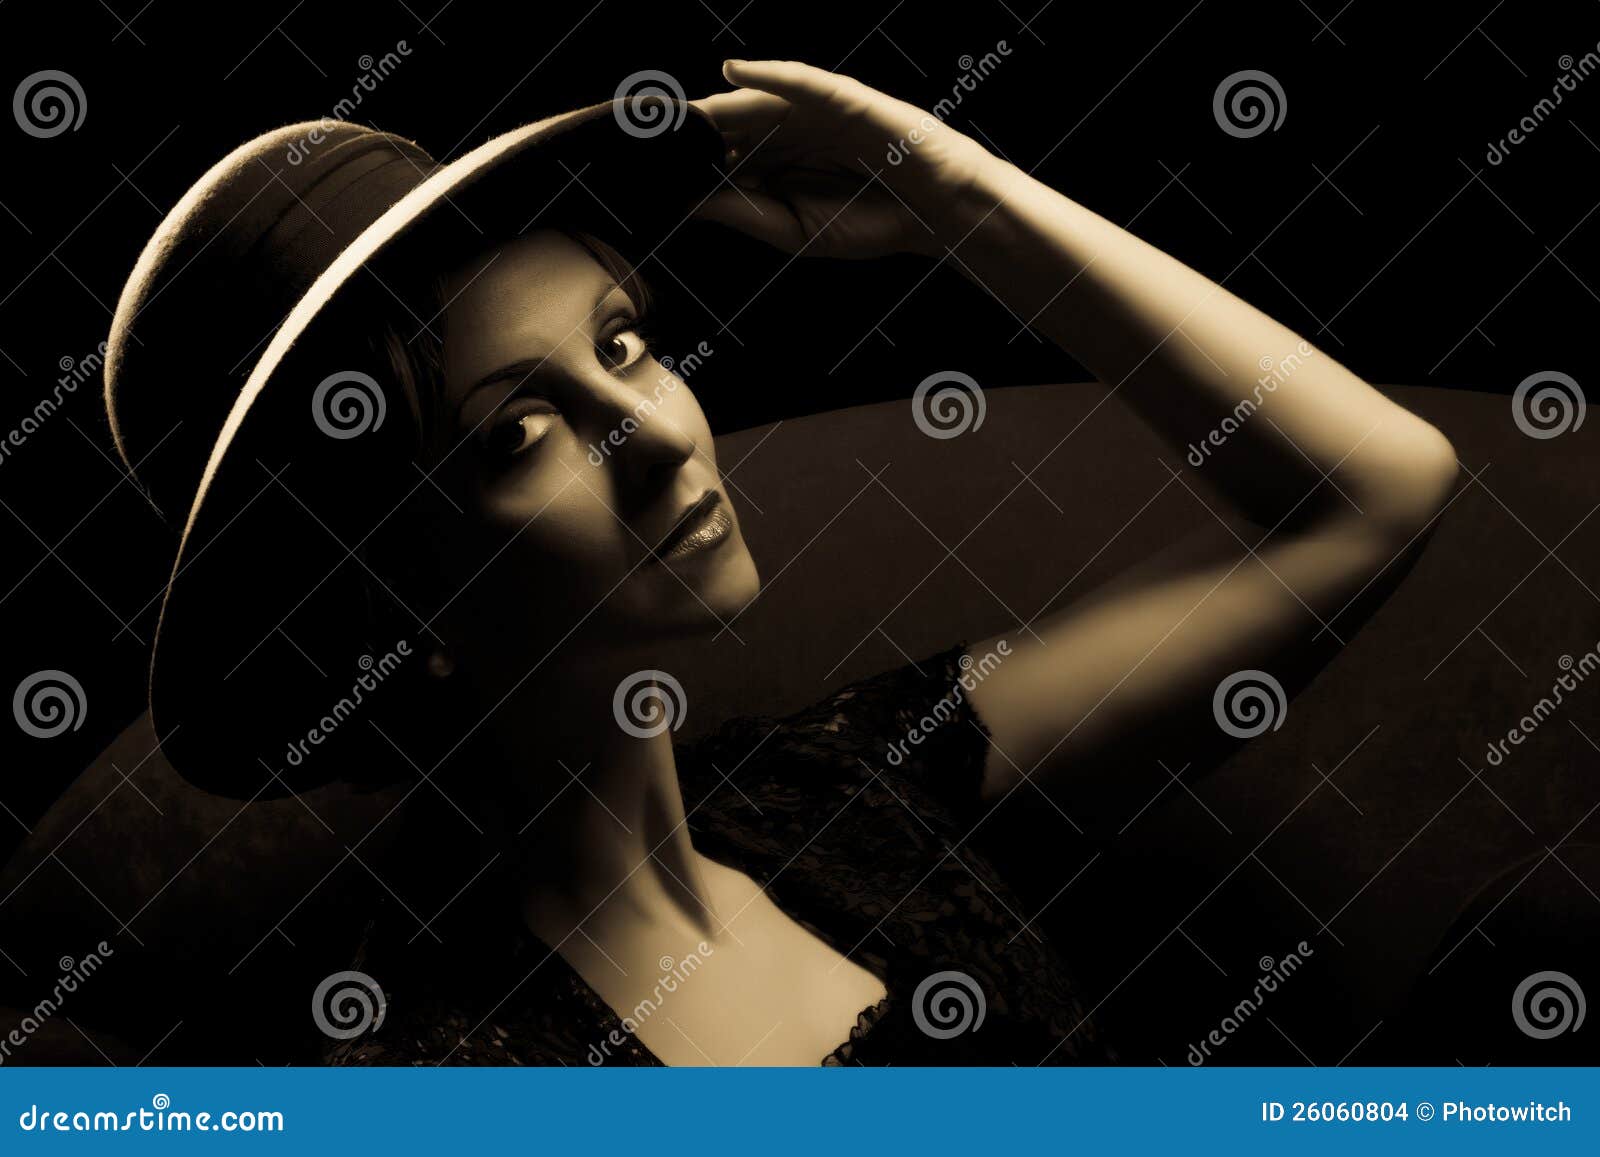 Chanel style stock photo. Image of actress, glamor, luxury - 26060804